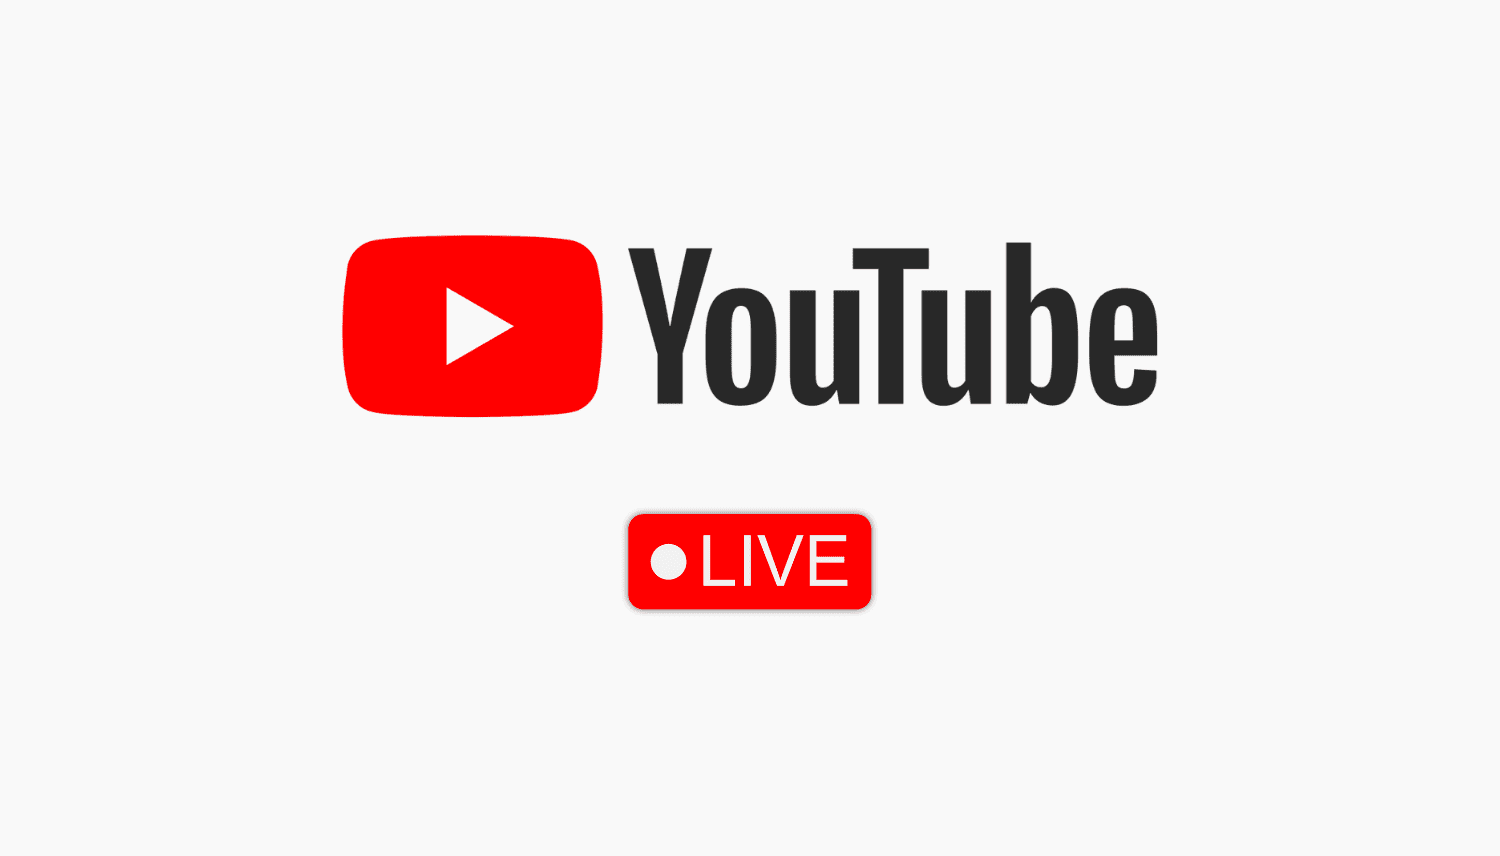 Live stream to YouTube